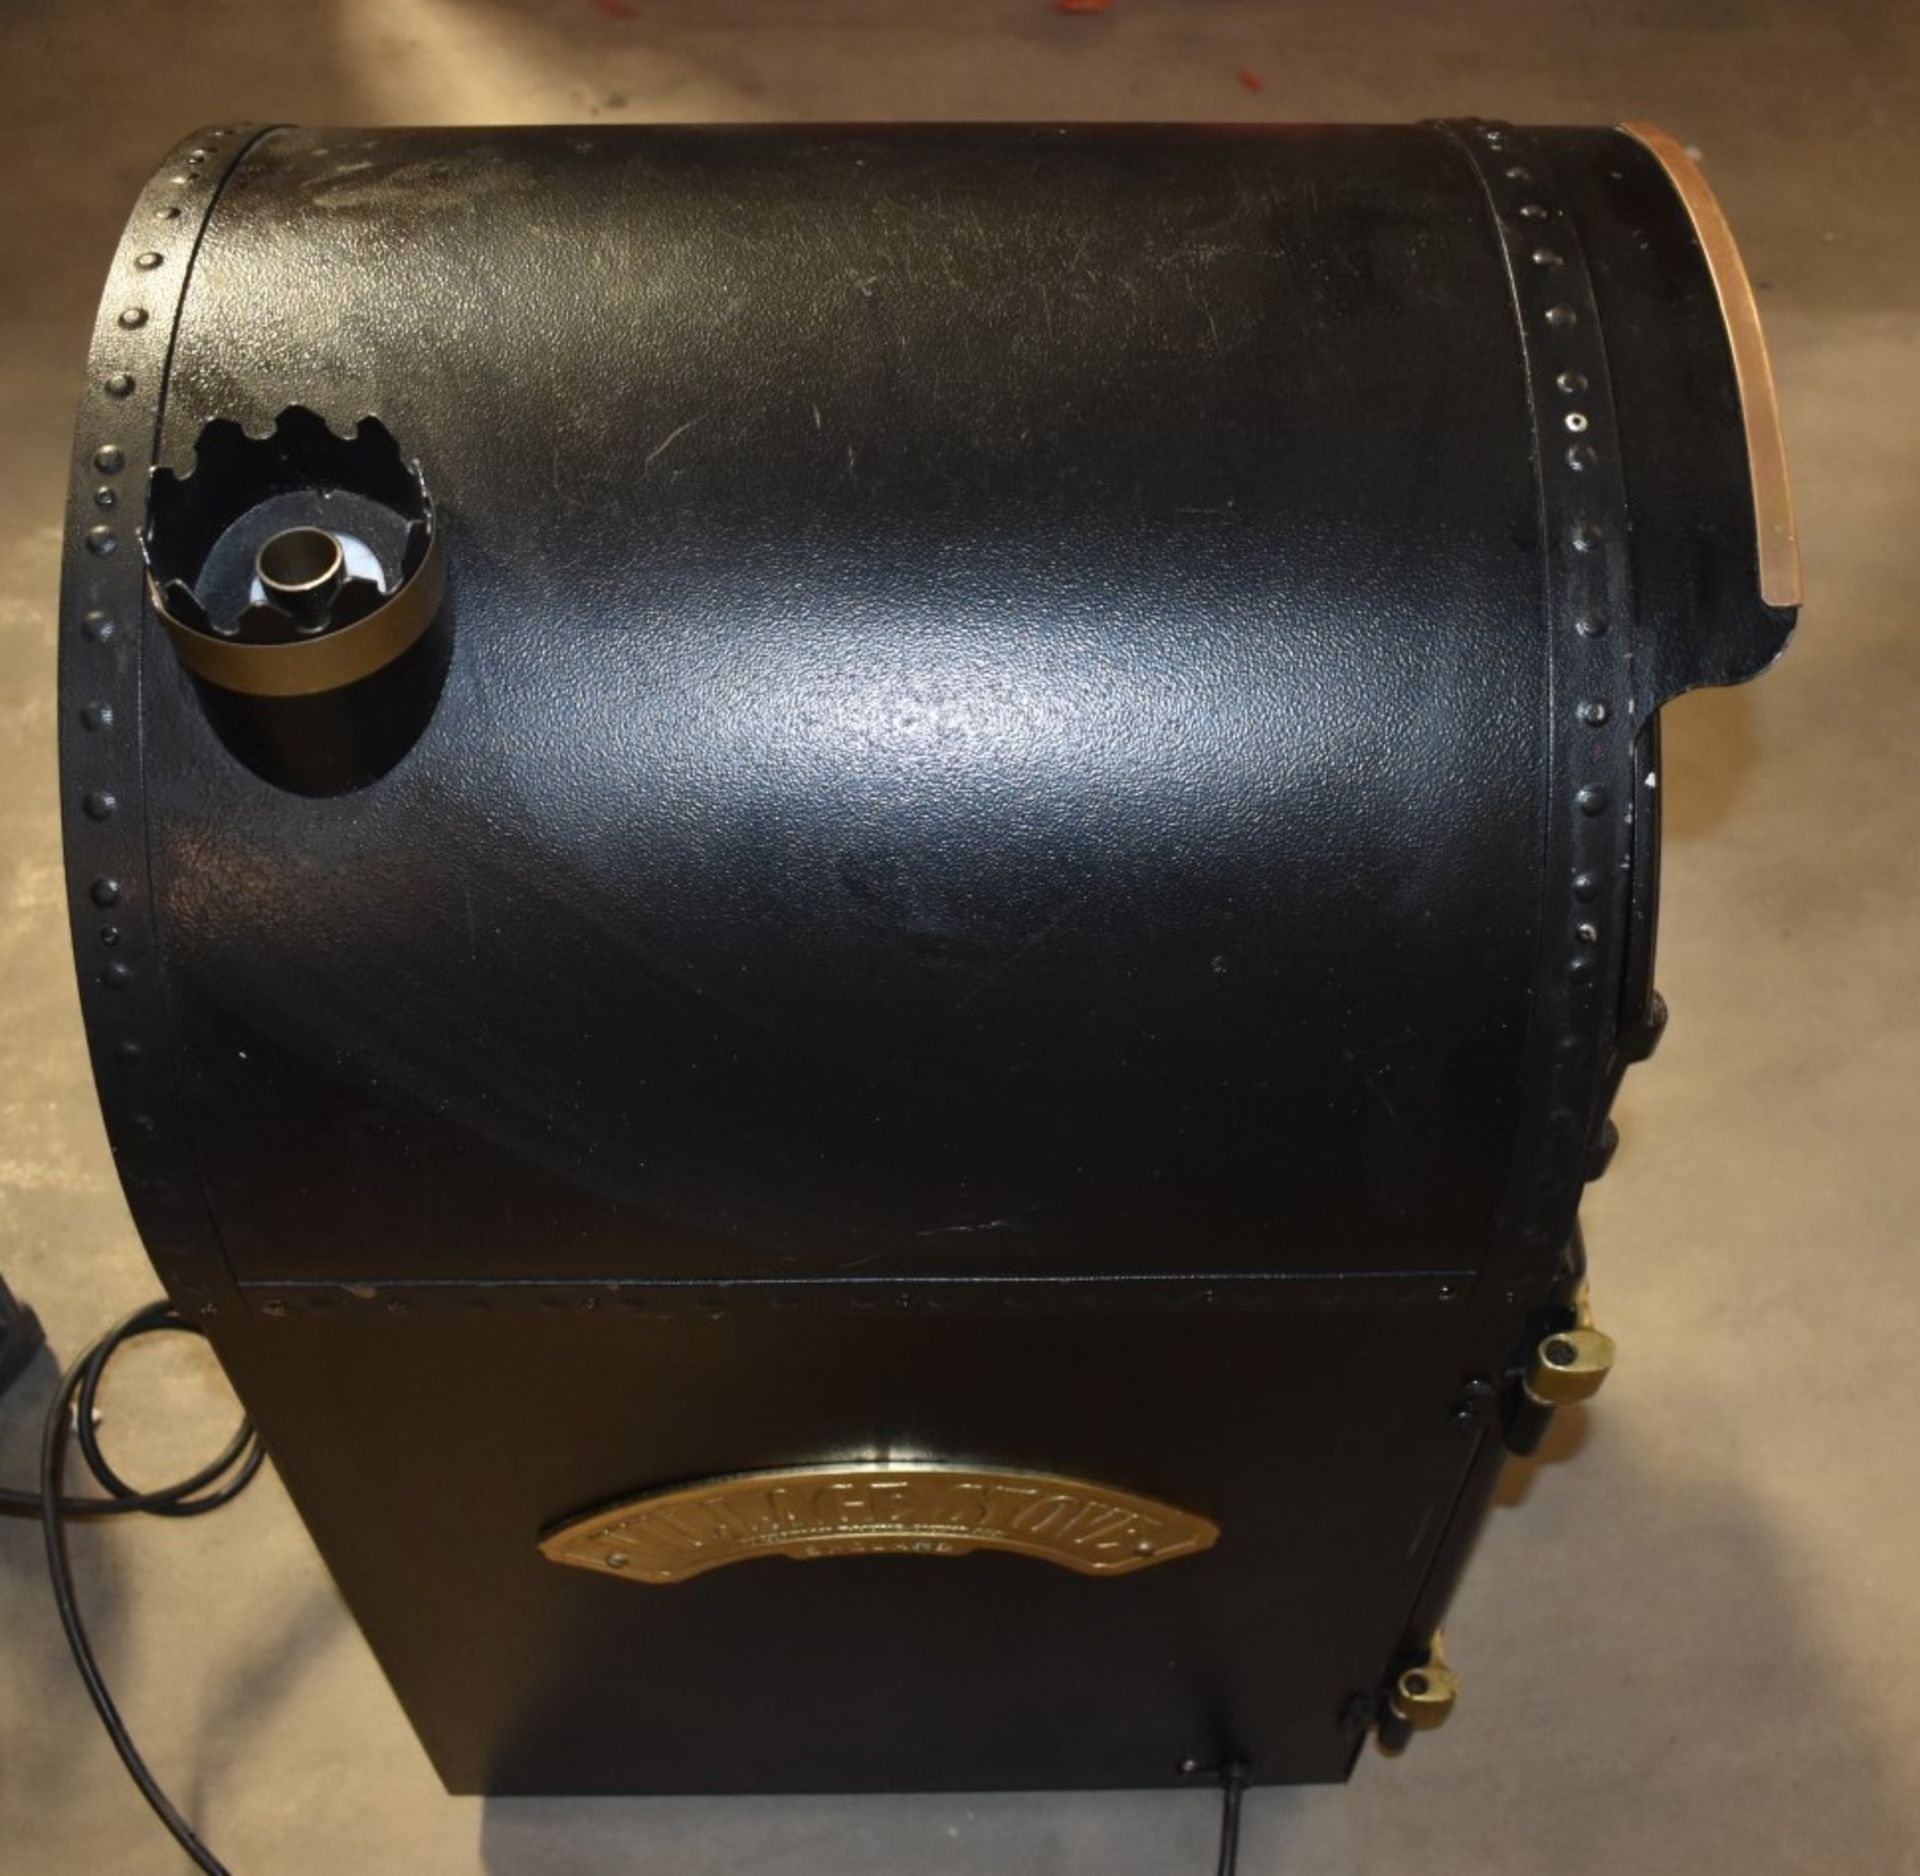 1 x Victorian Village Stove Potato Baking Oven - Model VS - 45 Potato Capacity - Approx RRP £2,600 - Image 4 of 18